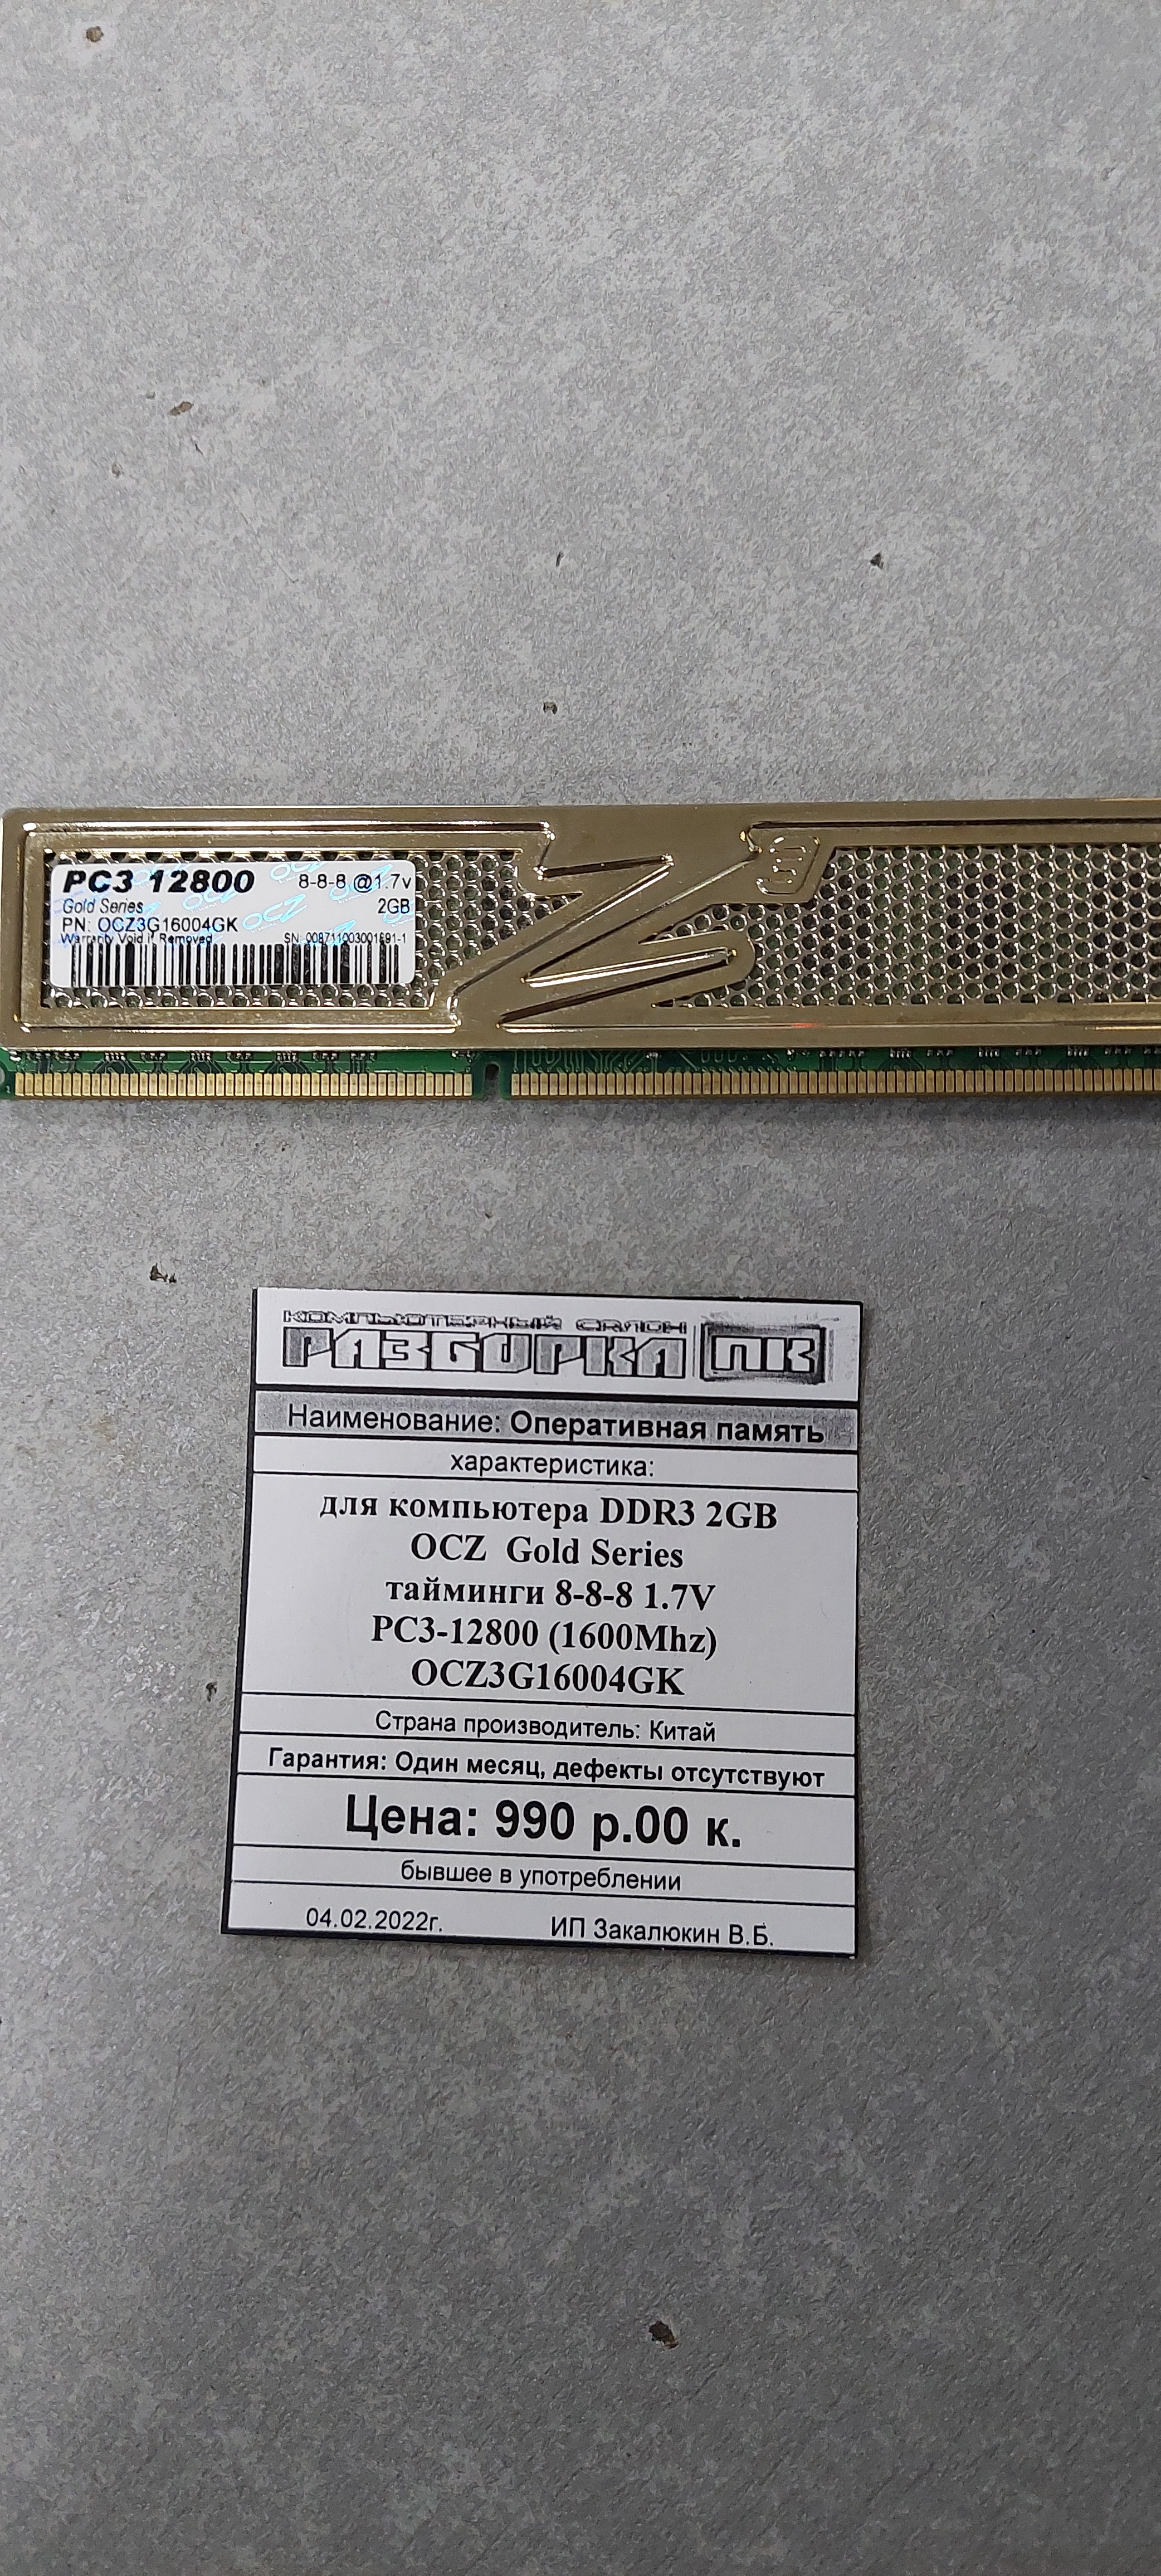 Оперативная память DIMM DDR3 2GB OCZ Gold Series OCZ3G16004GK